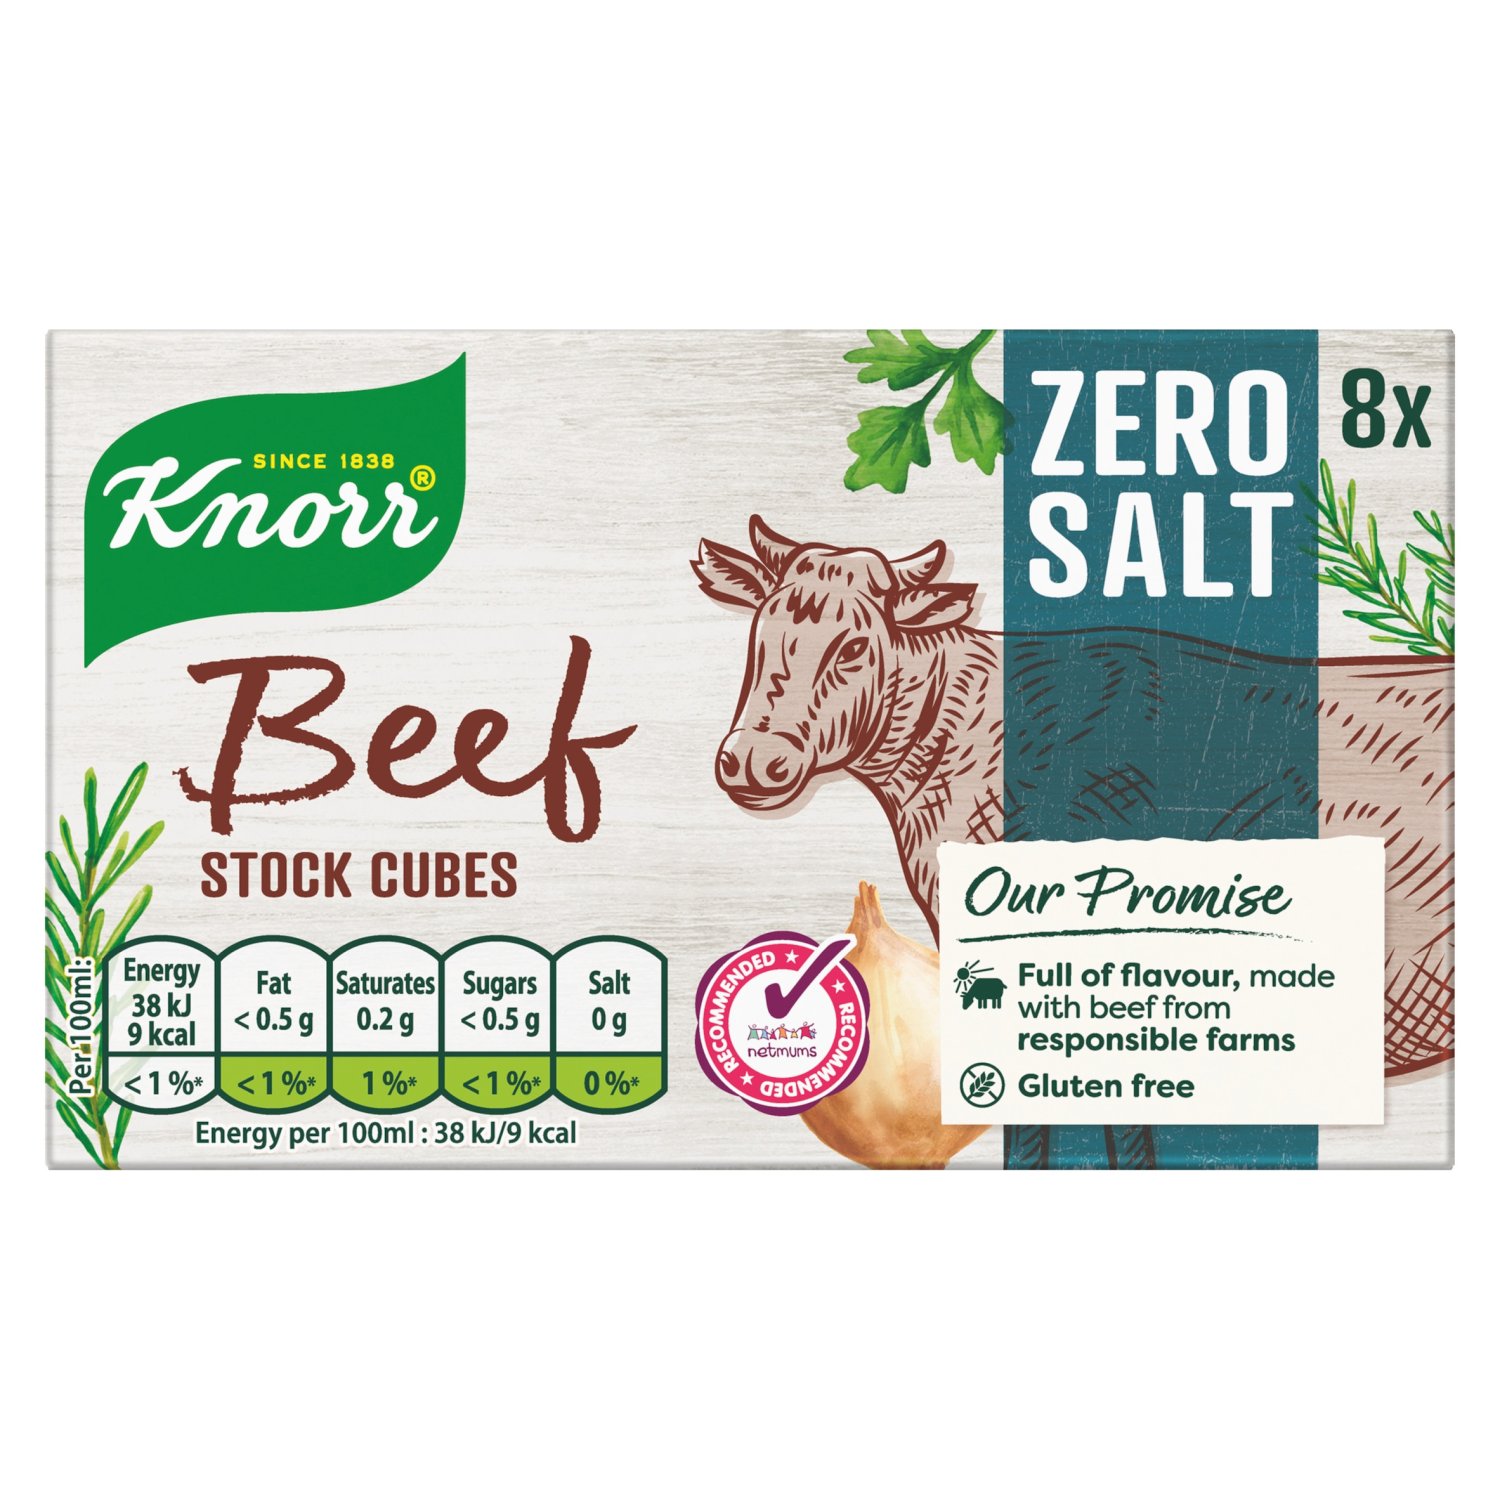 Knorr Beef Zero Salt Stock Cube 8 Pack (72 g)